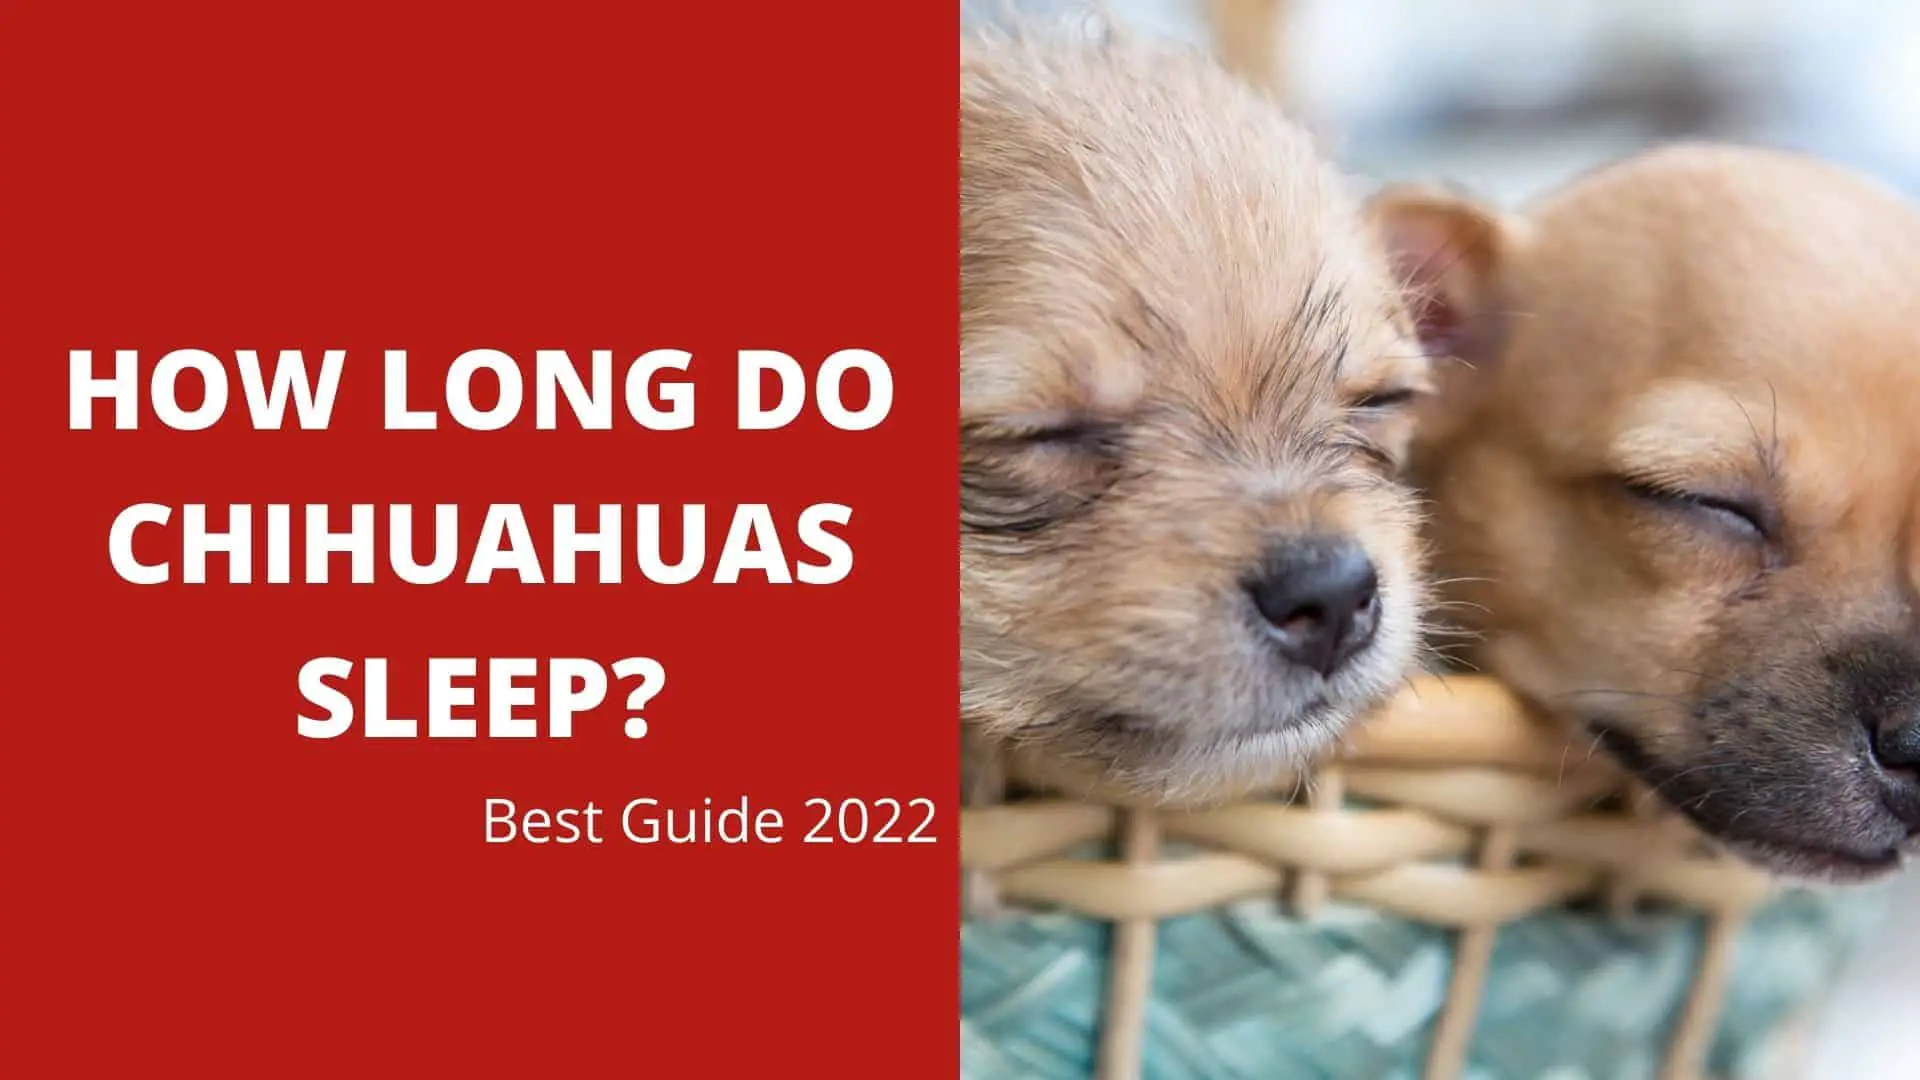 How Long Do Chihuahuas Sleep? Best Guide 2022